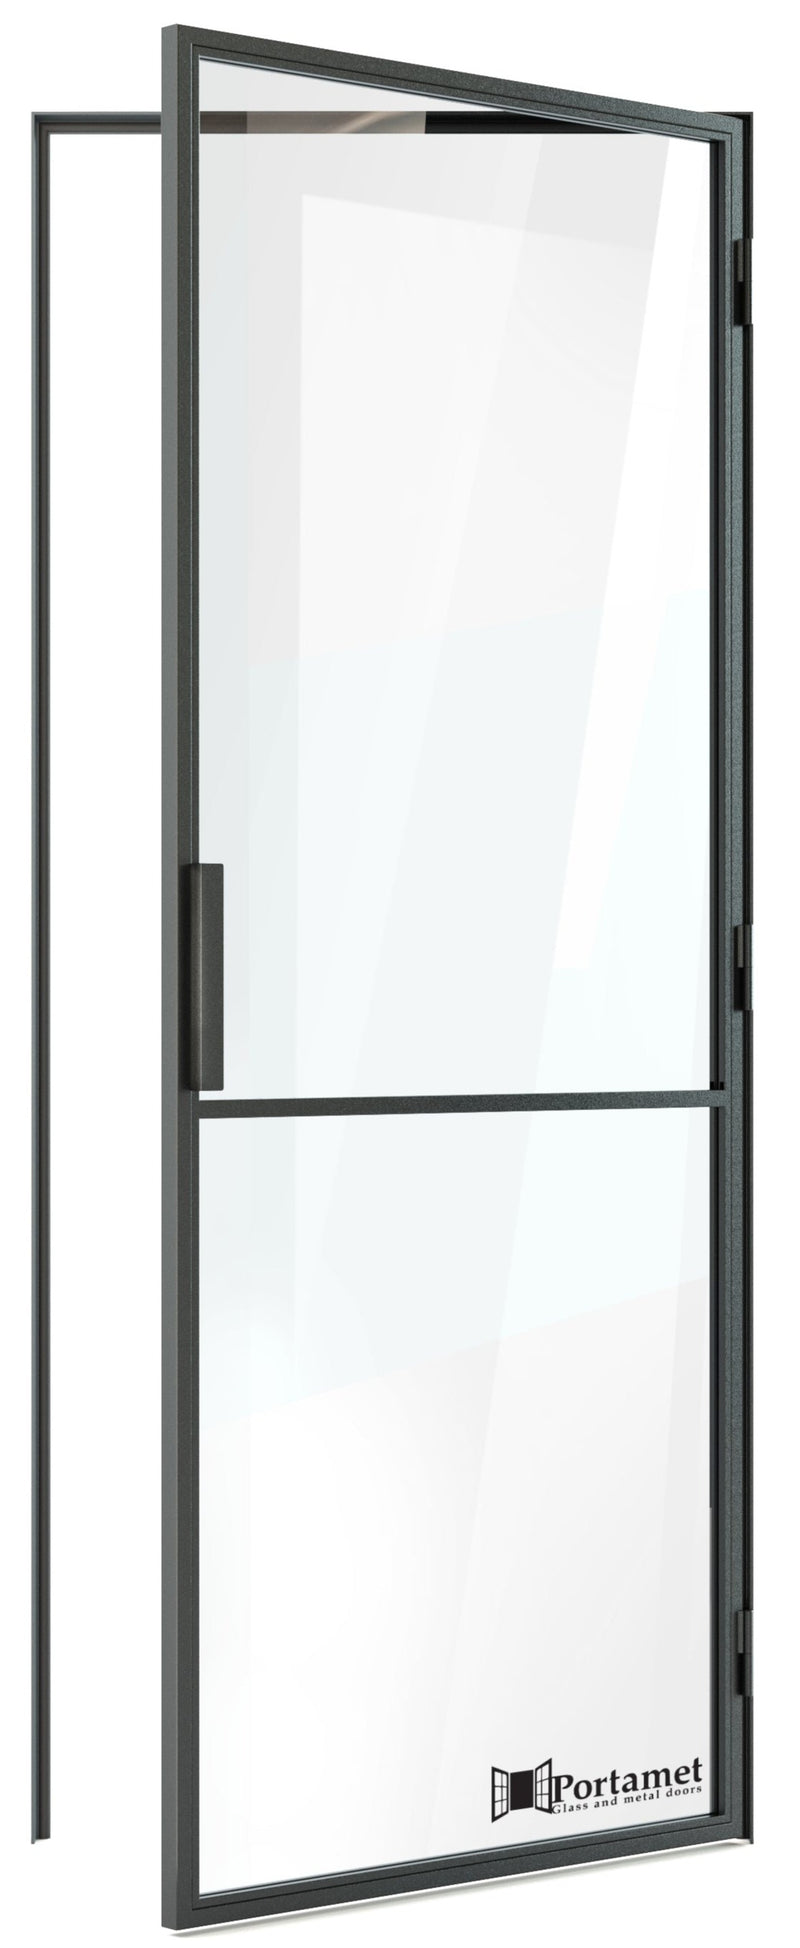 Portamet by Sfarzo - Madrid Classic Single Glazed Steel Hinged Door with Frame